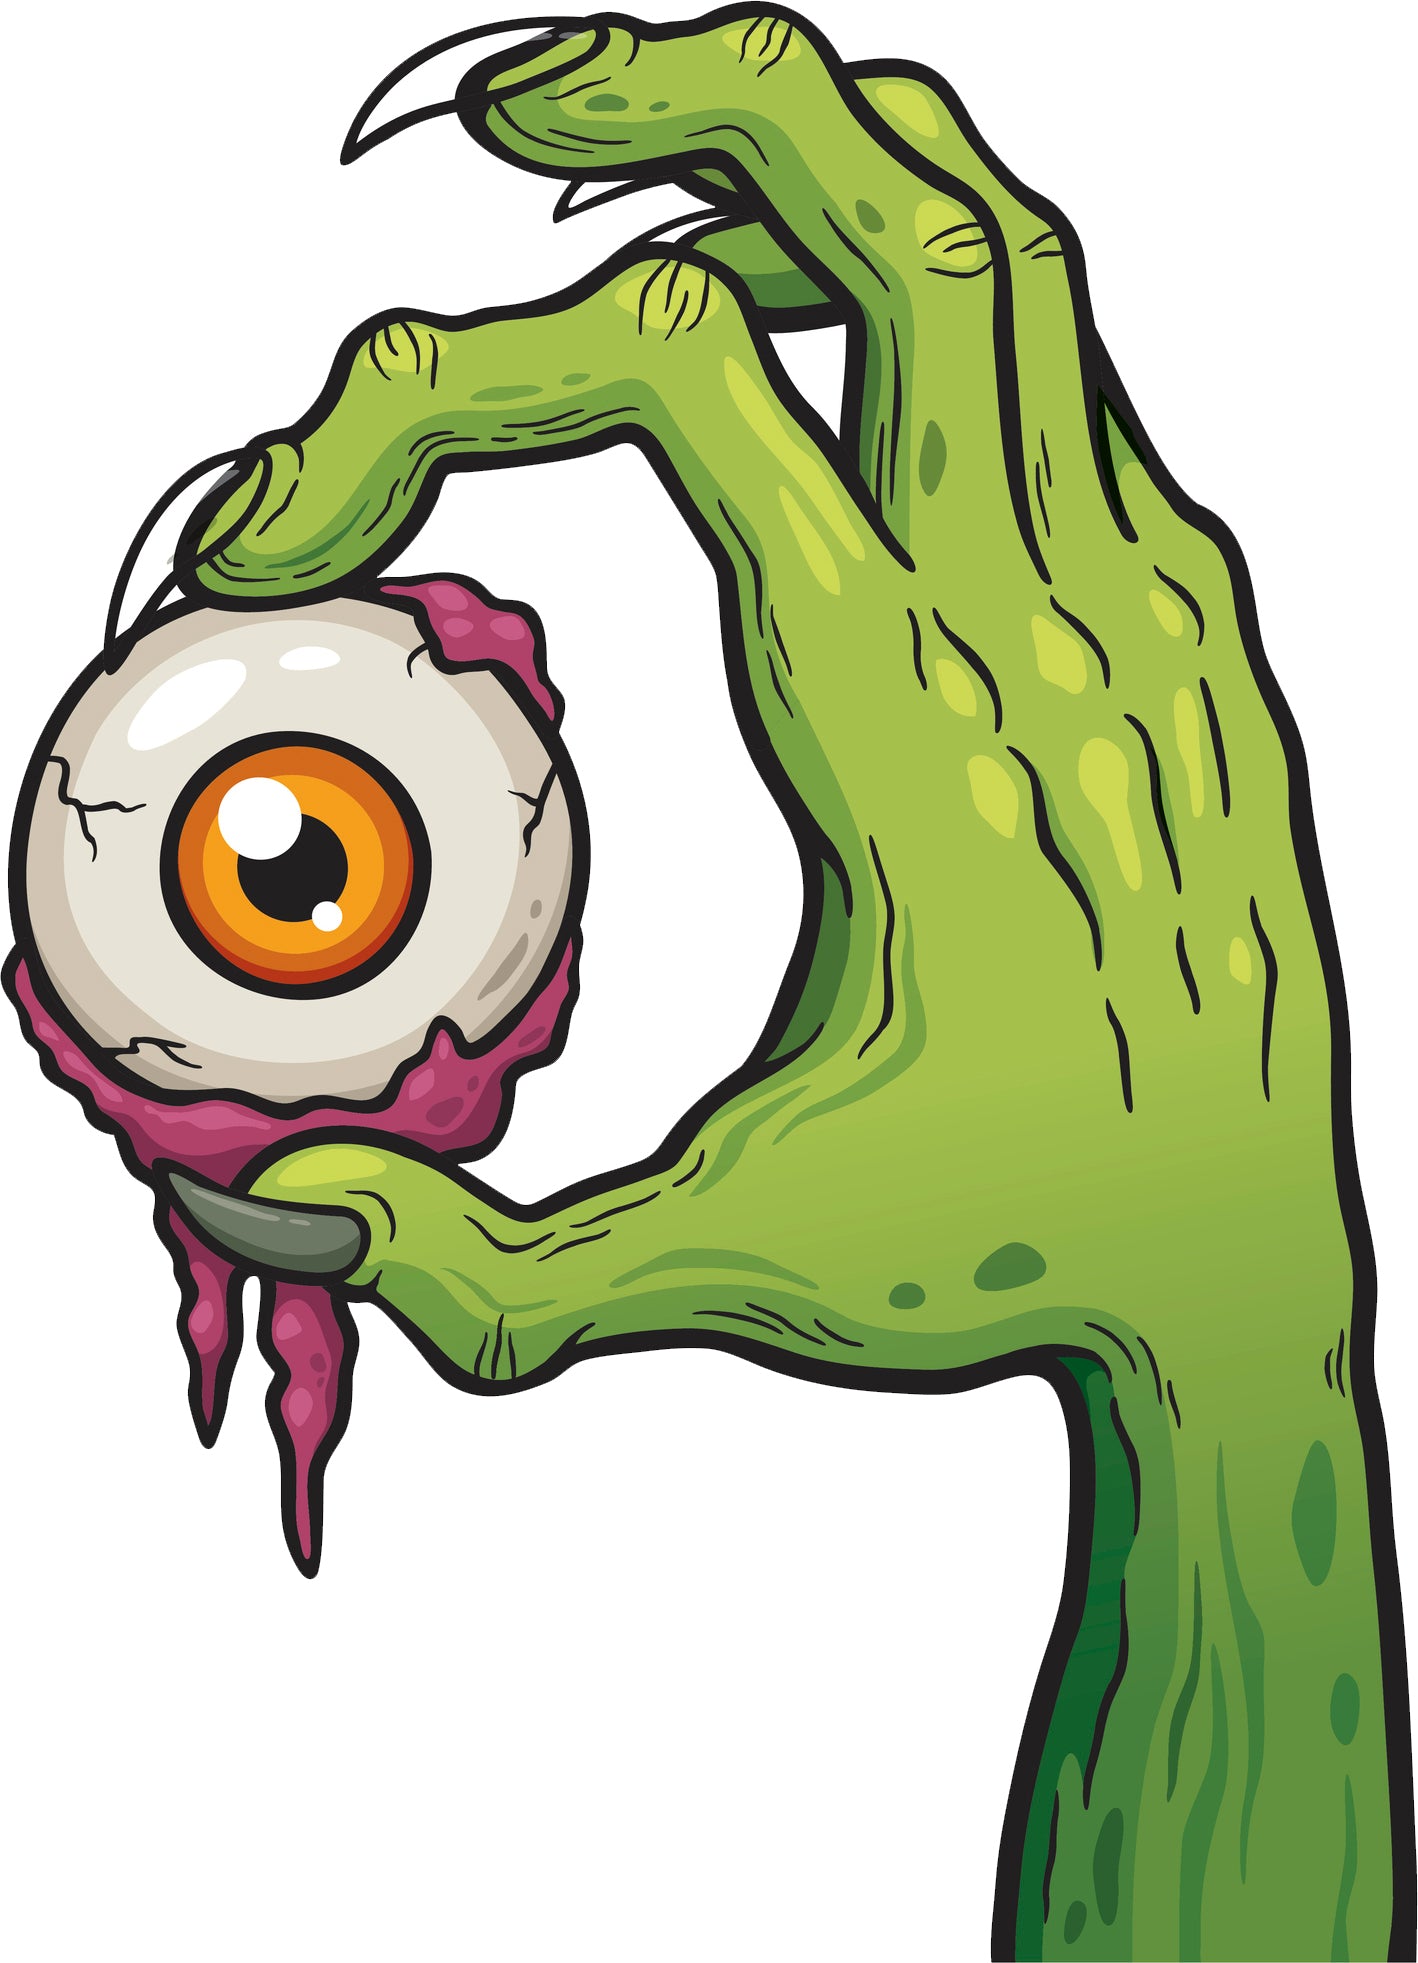 Creepy Scary Vintage Retro Monster Cartoon - Zombie Hand and Eye Vinyl Decal Sticker